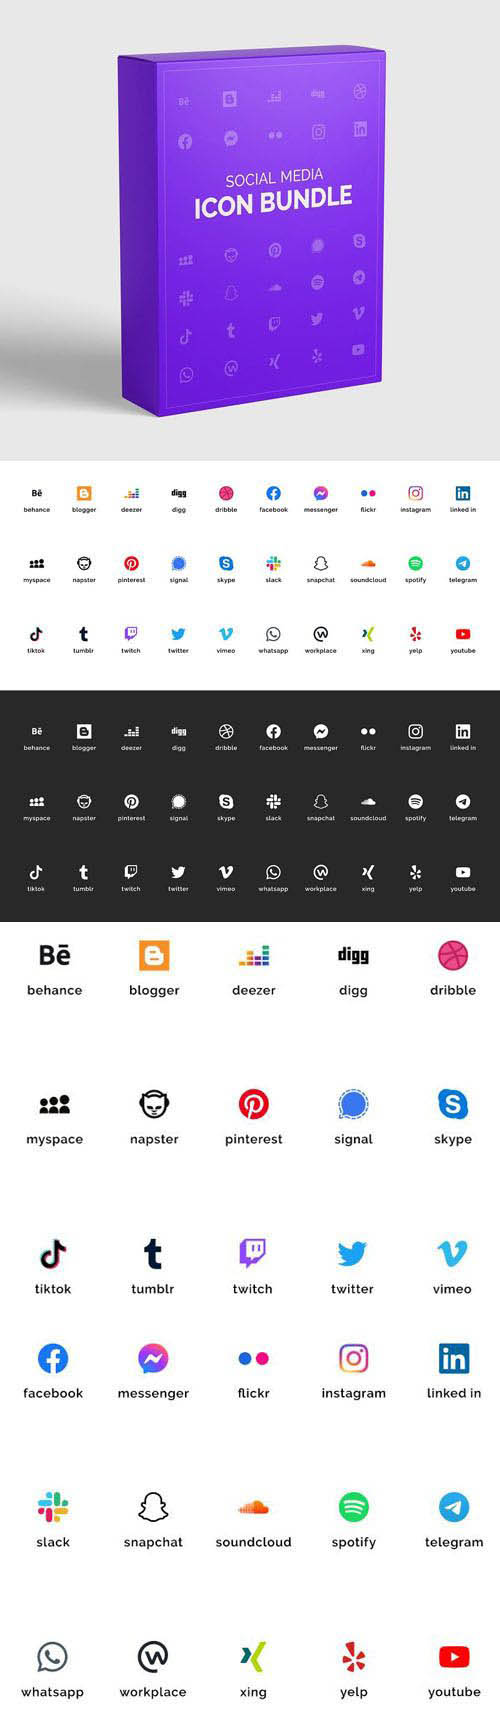 Icon Bundle - 30 Official Social Media Vector Icons [Color/Black/White]